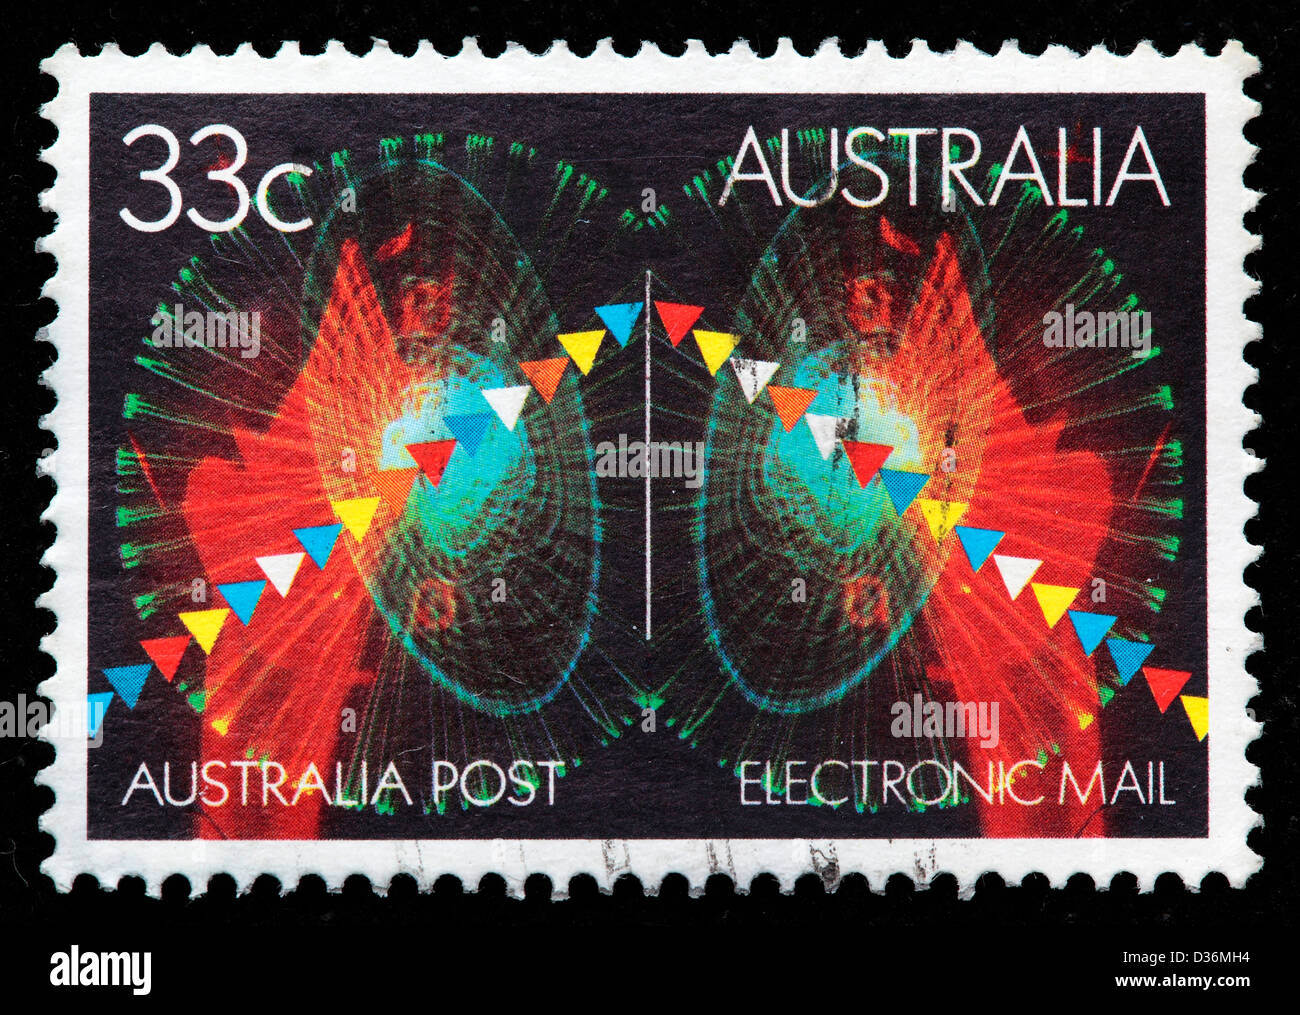 Electronic mail, postage stamp, Australia, 1985 Stock Photo